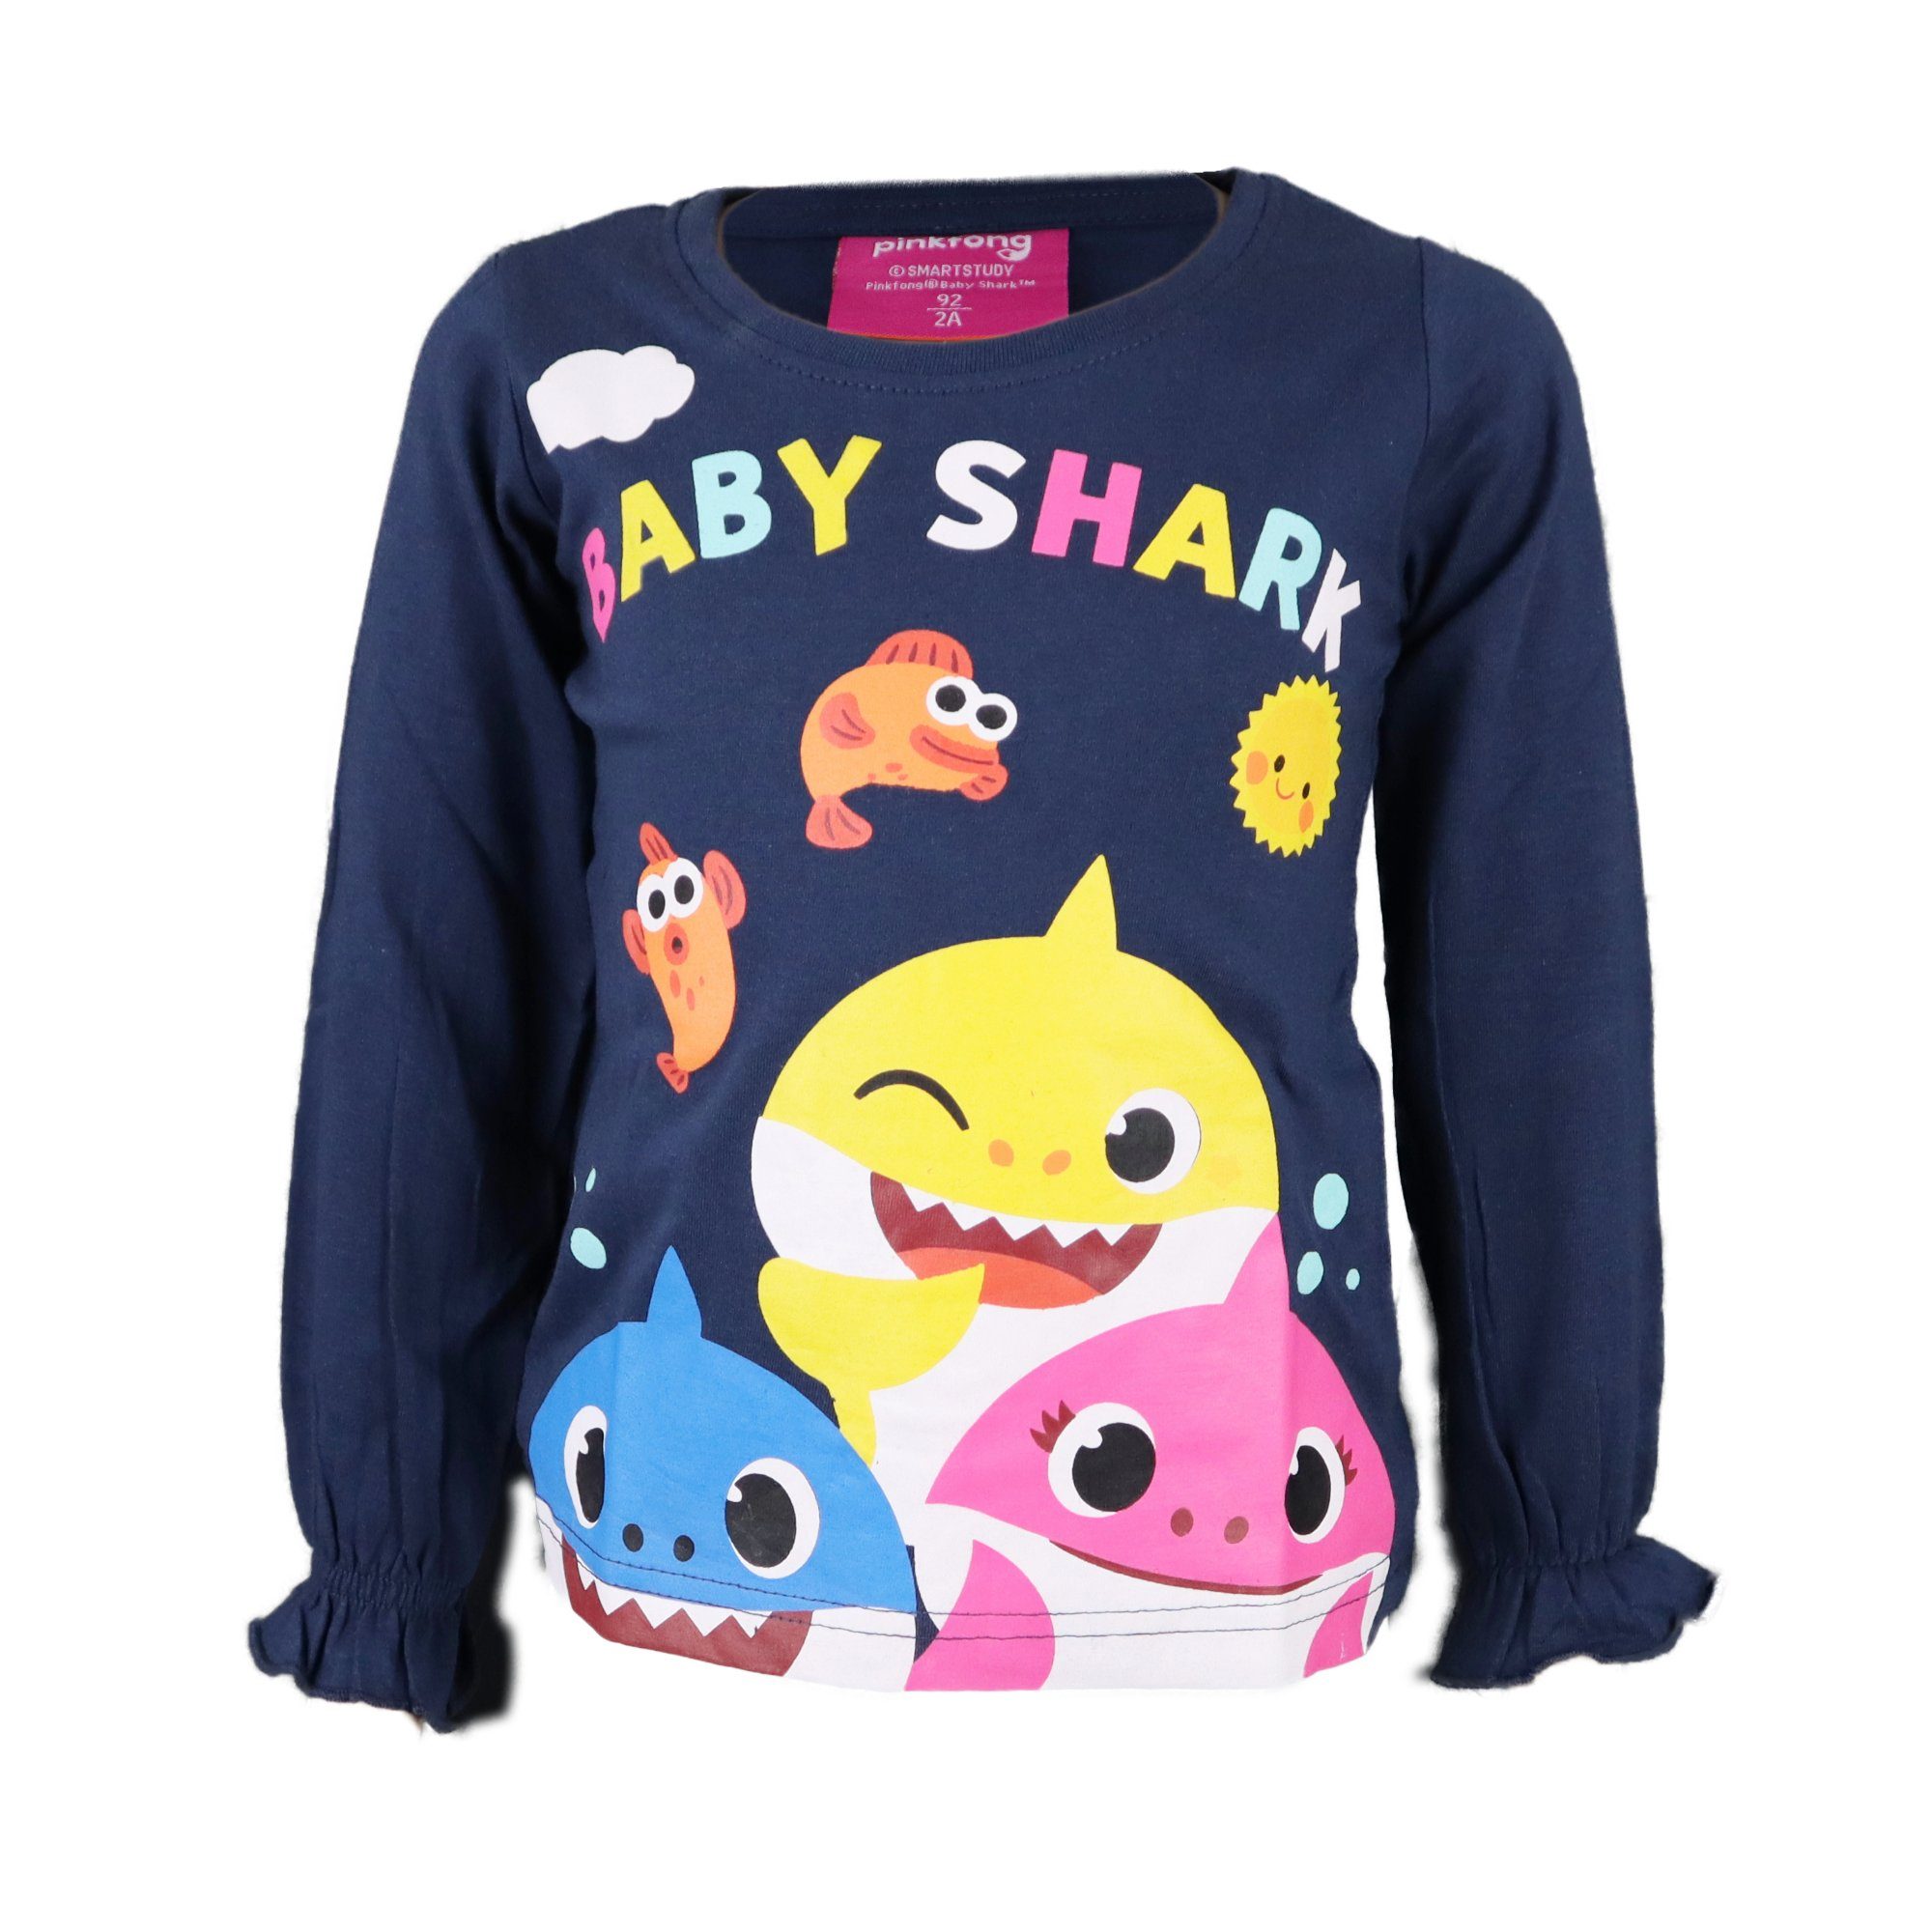 EplusM Langarmshirt Baby Shark oder Blau bis Pink 92 Shirt Kinder Mädchen 116, Gr. Baumwolle, langarm